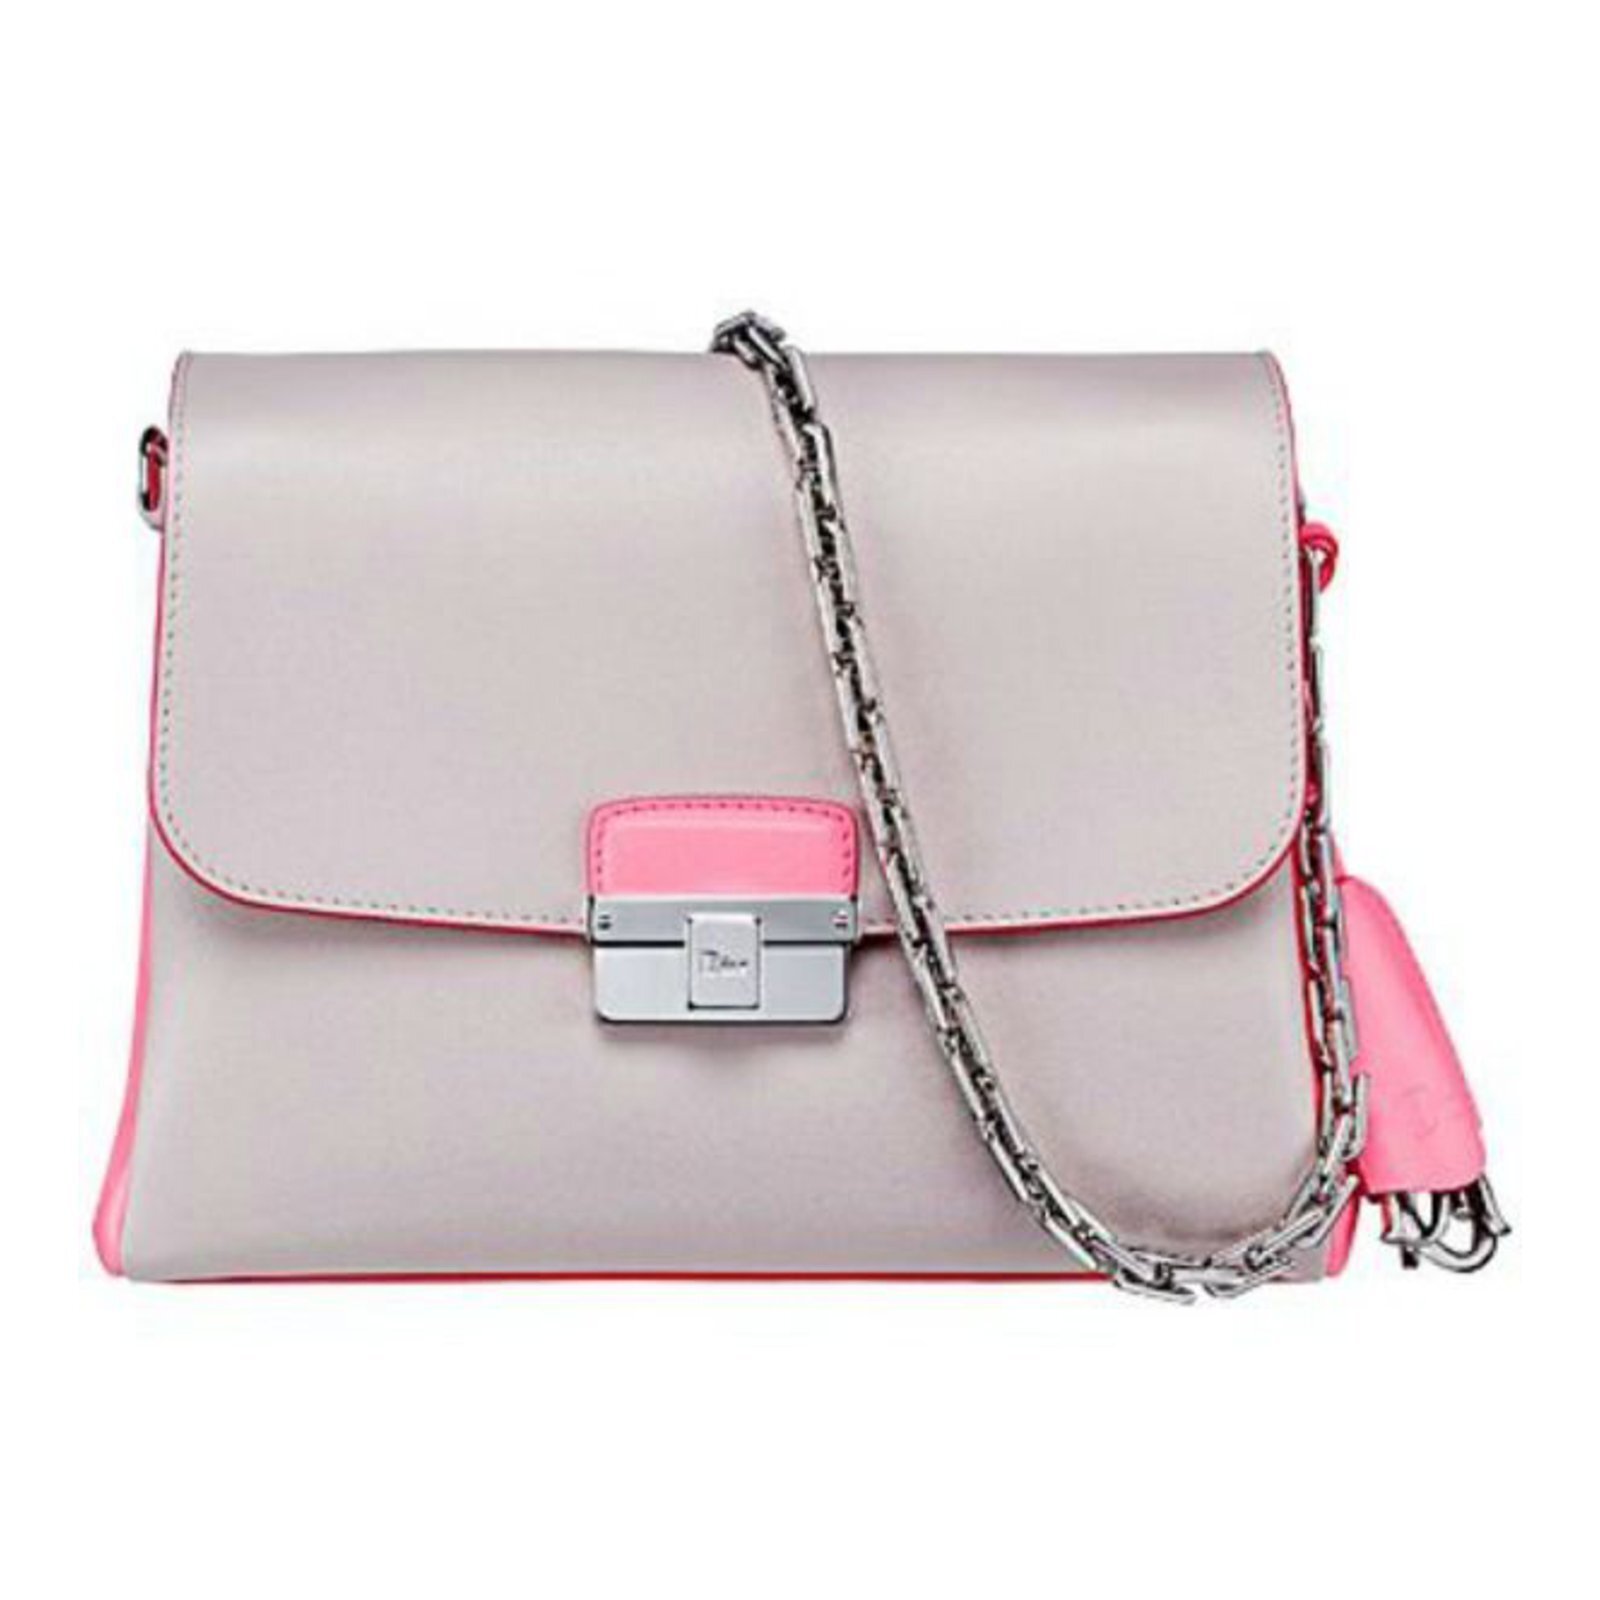 pink-diorling-two-tone-leather-handbag.jpg